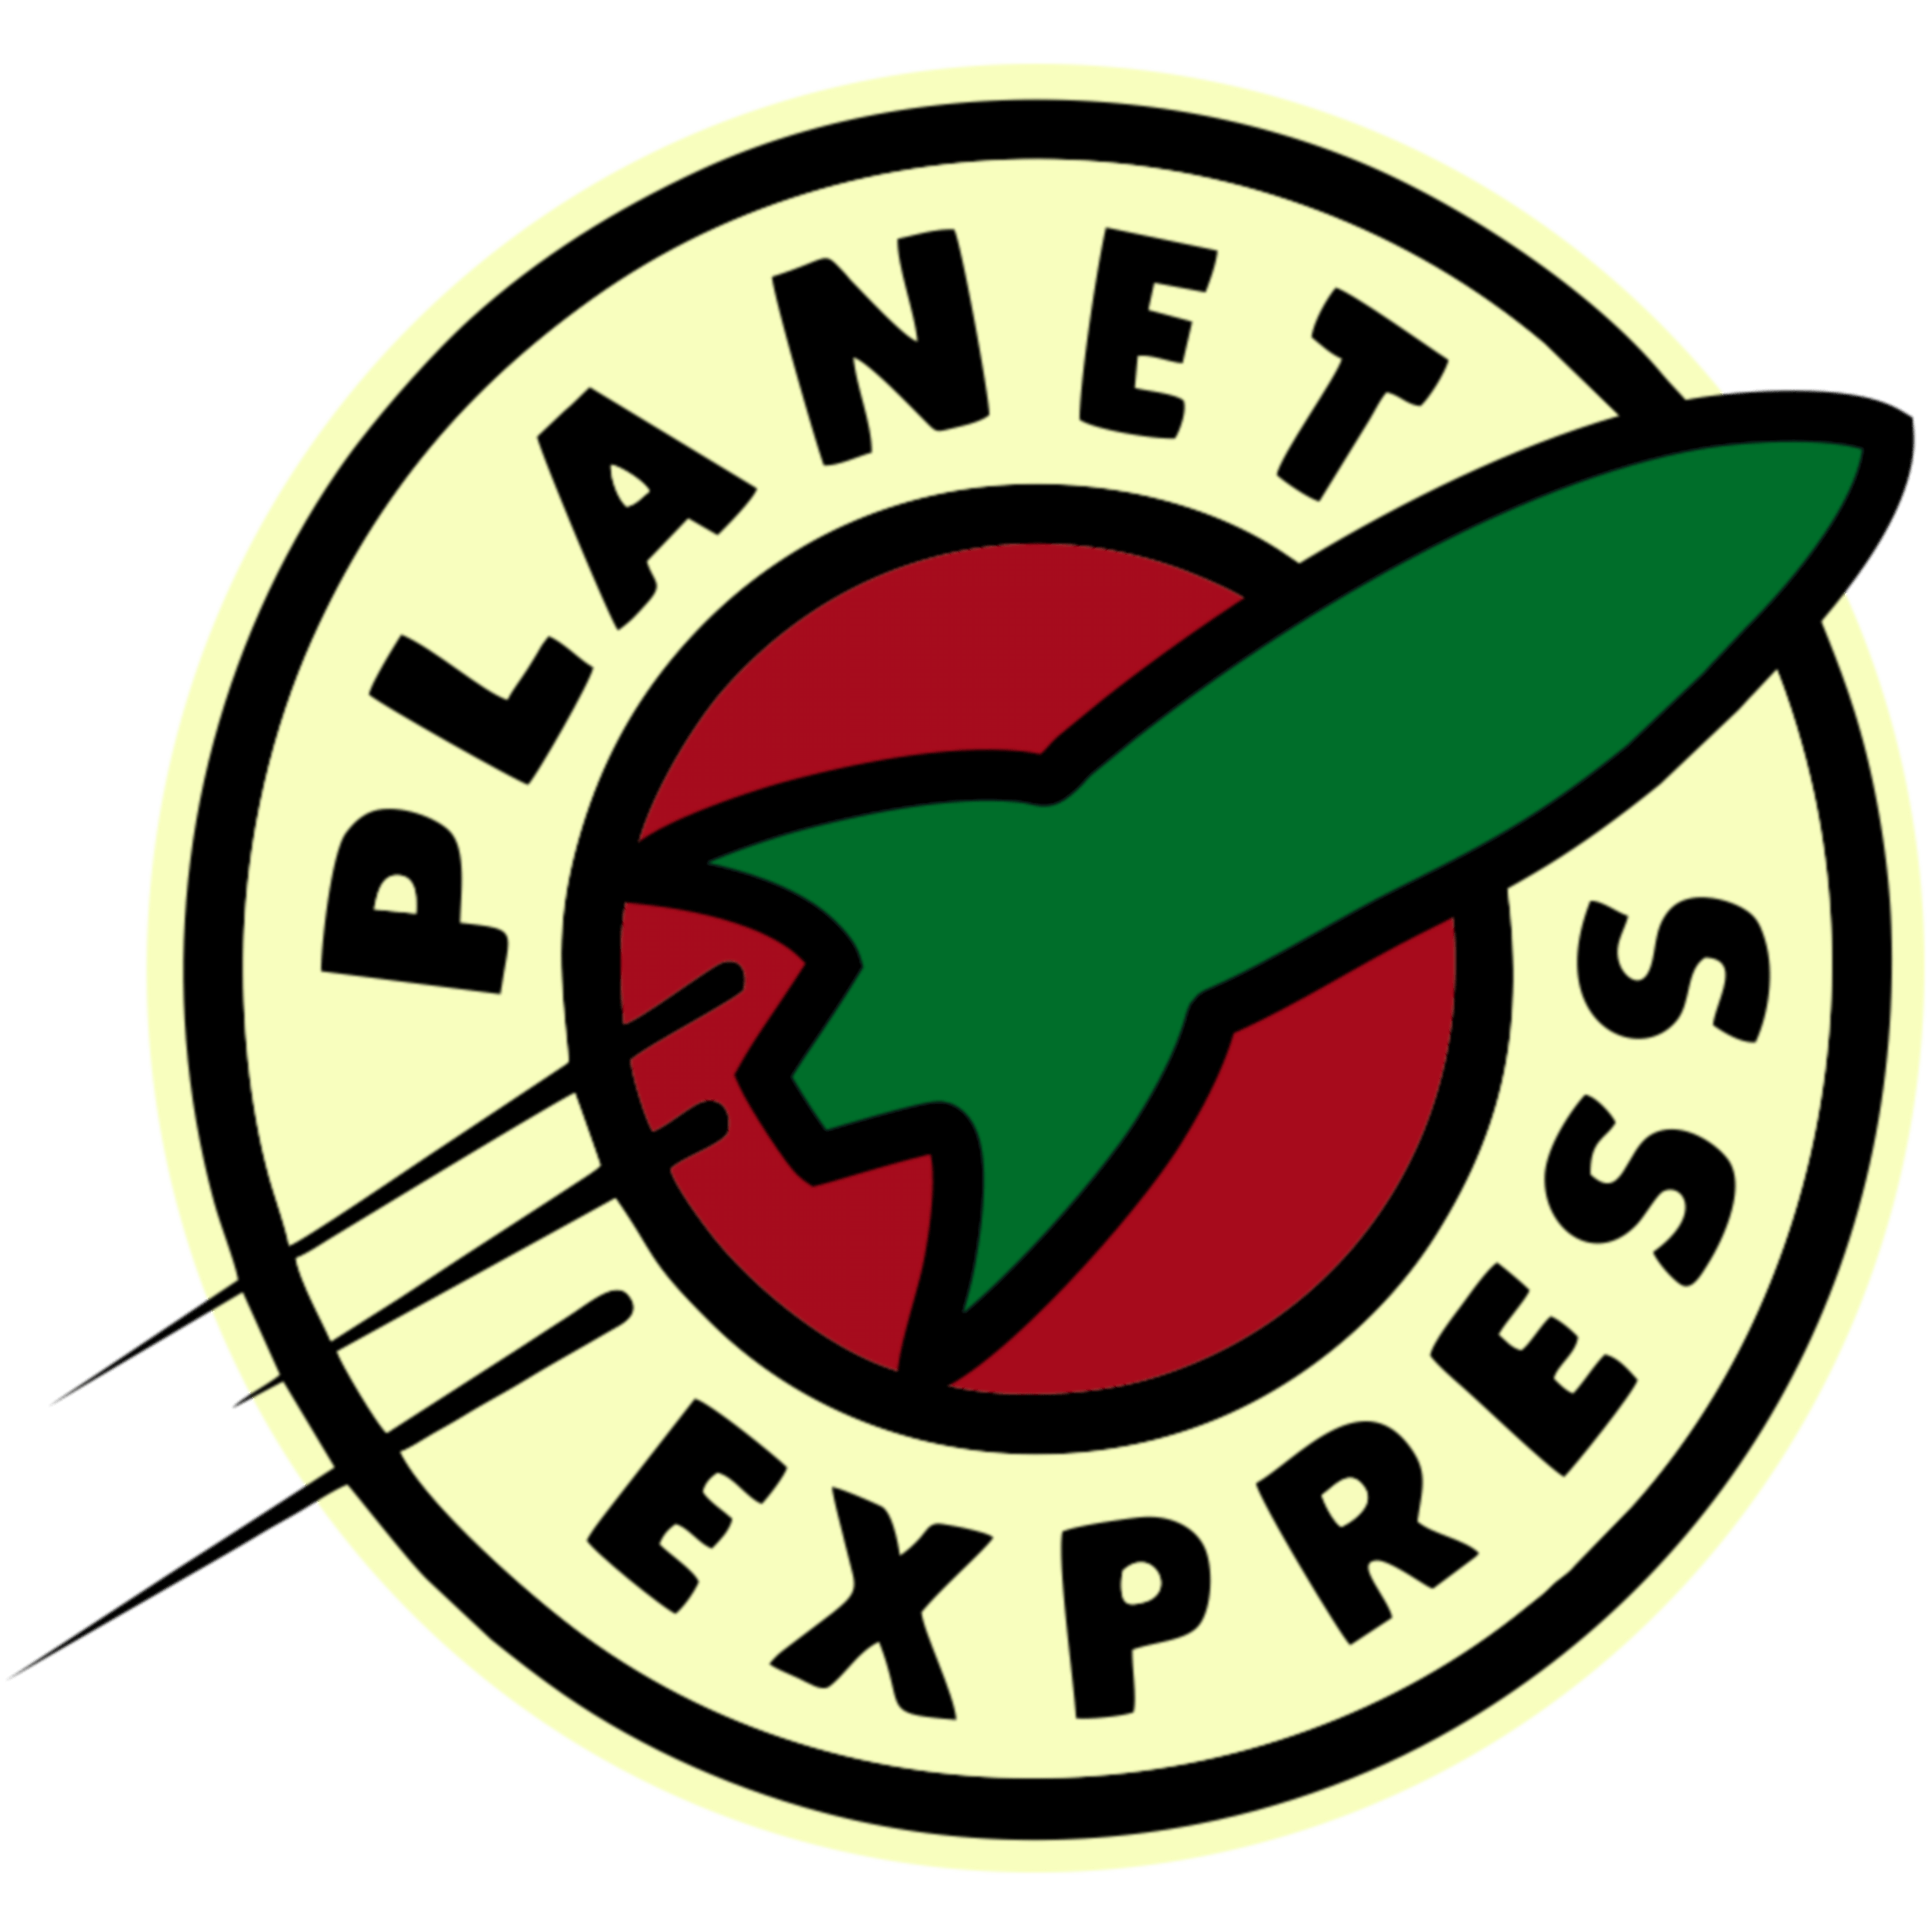 Planet Express Logo - Planet Express Logo #futurama #planet #express #logo #teepublic ...